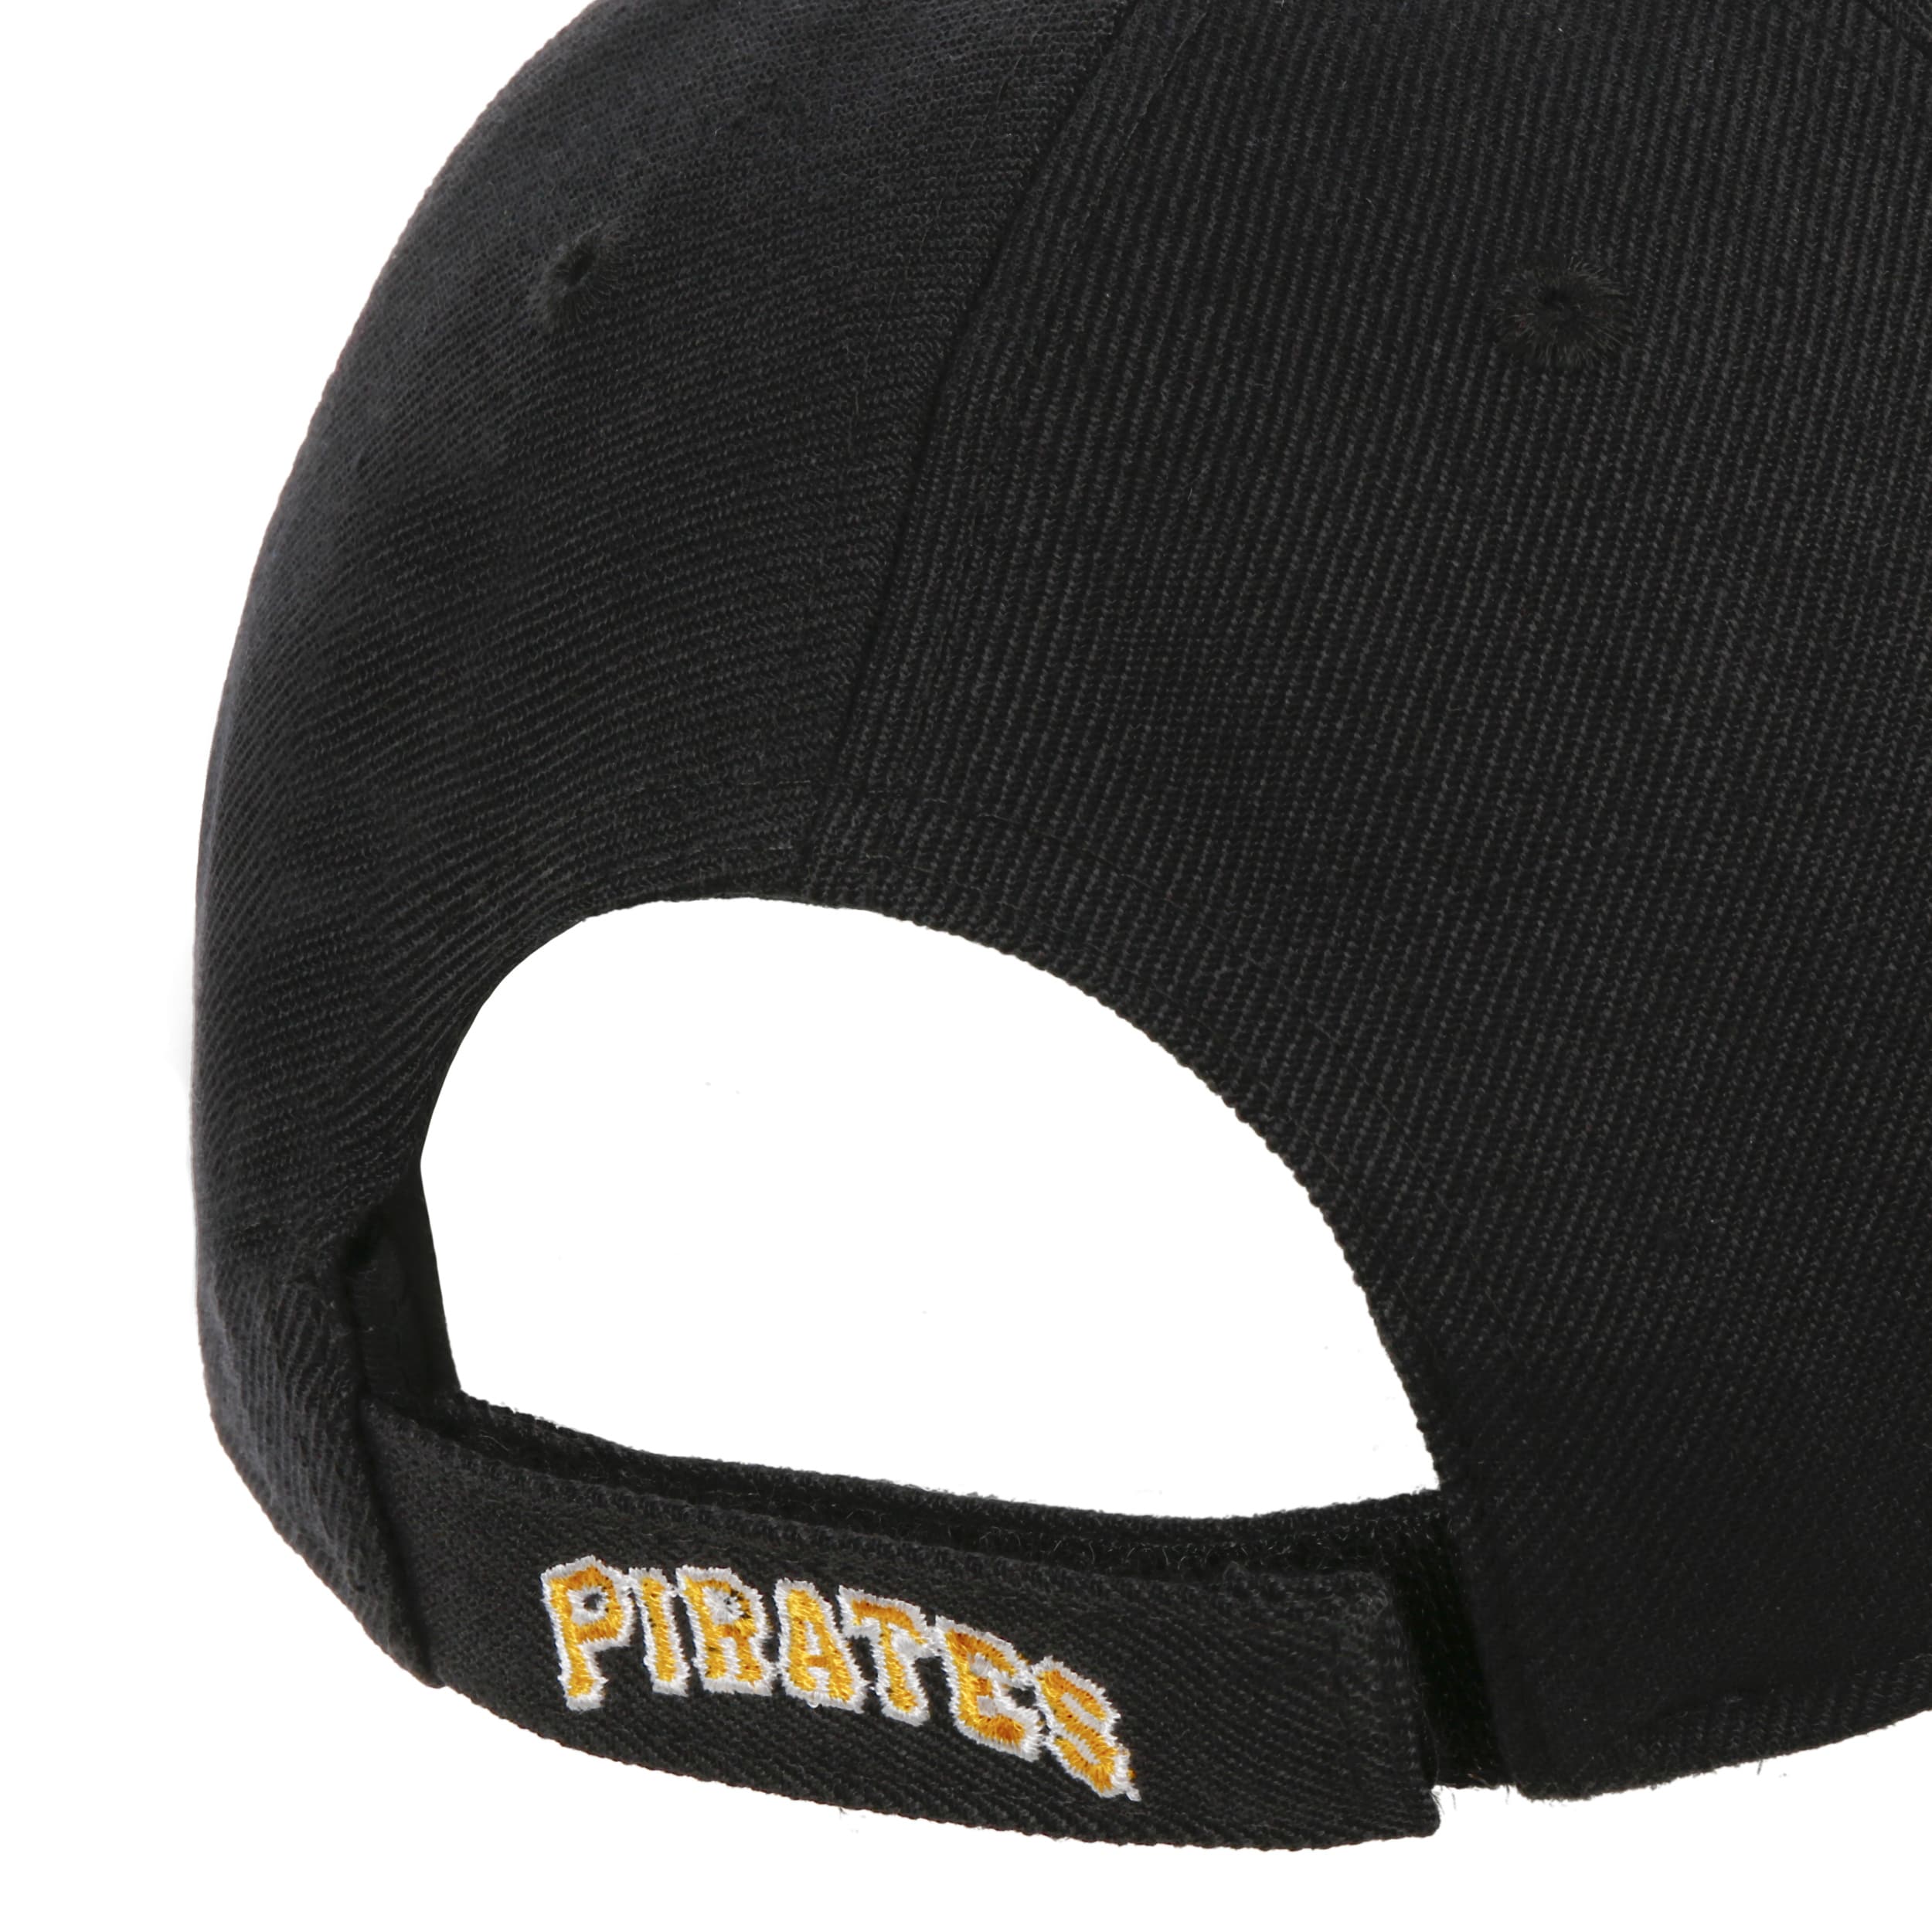 New Era Pittsburgh Pirates MLB 9FIFTY Leather Snapback Hat